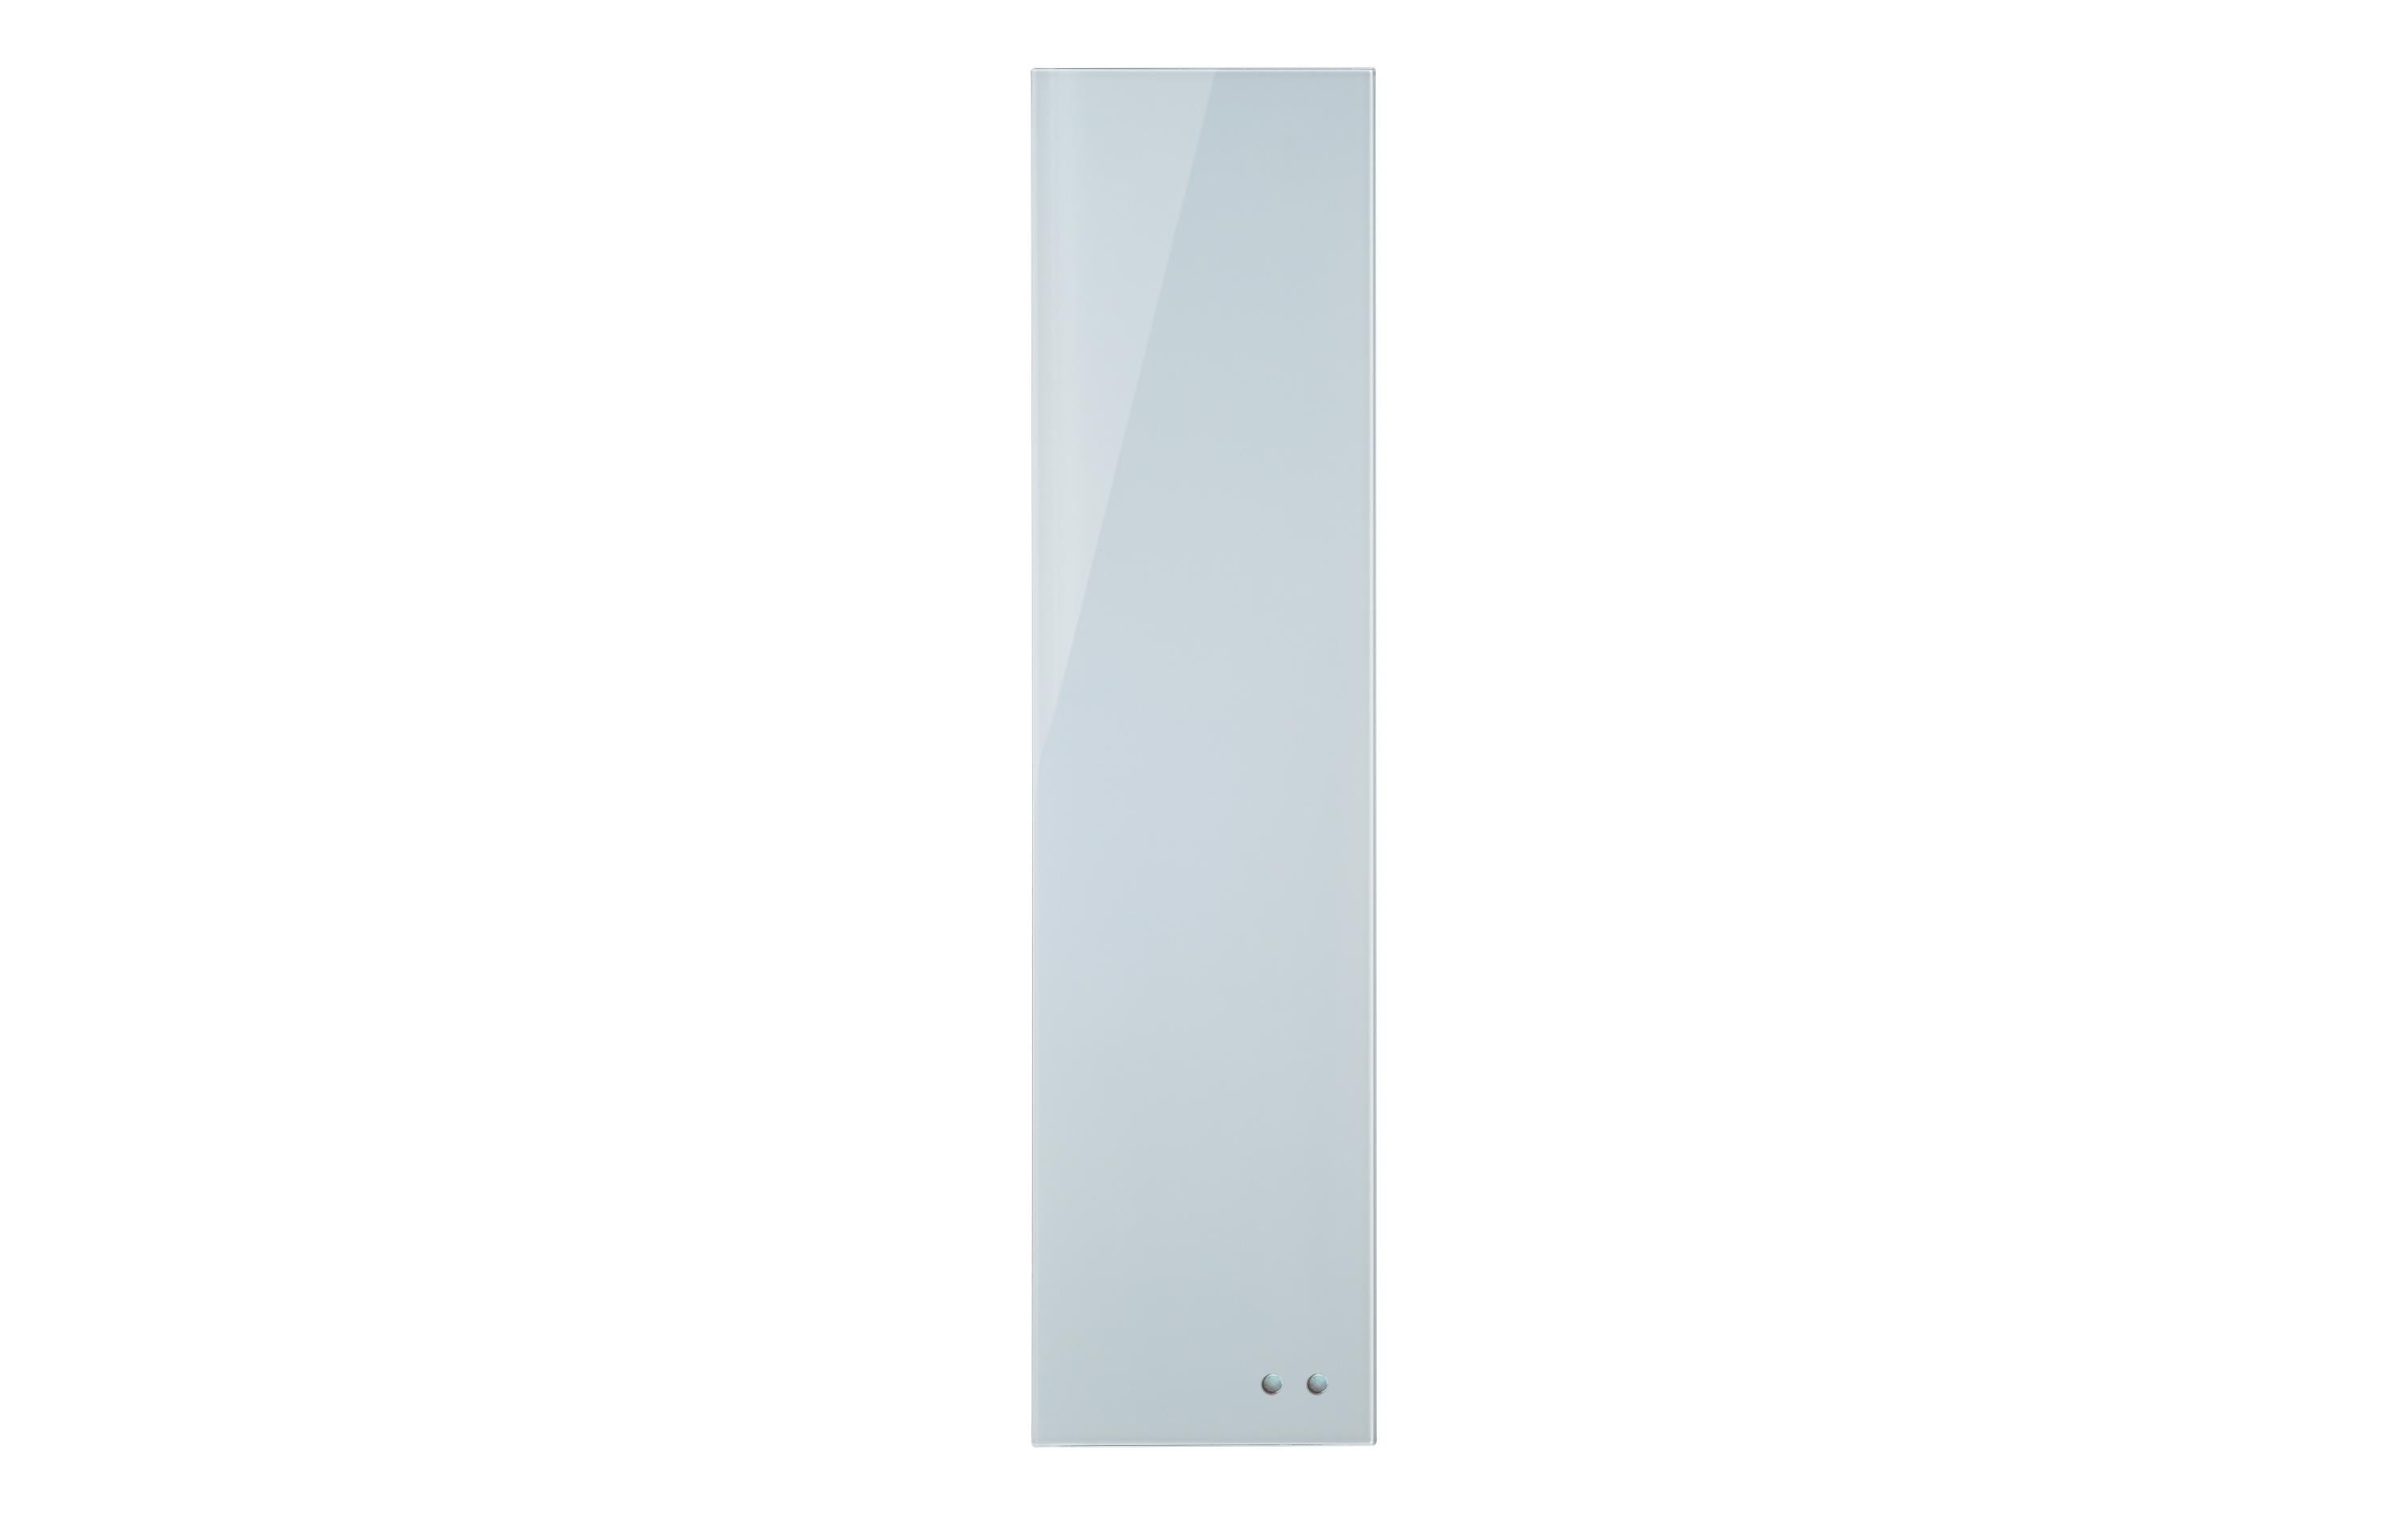 Bi-Office Magnethaftendes Glassboard 80 cm x 20 cm, Weiss